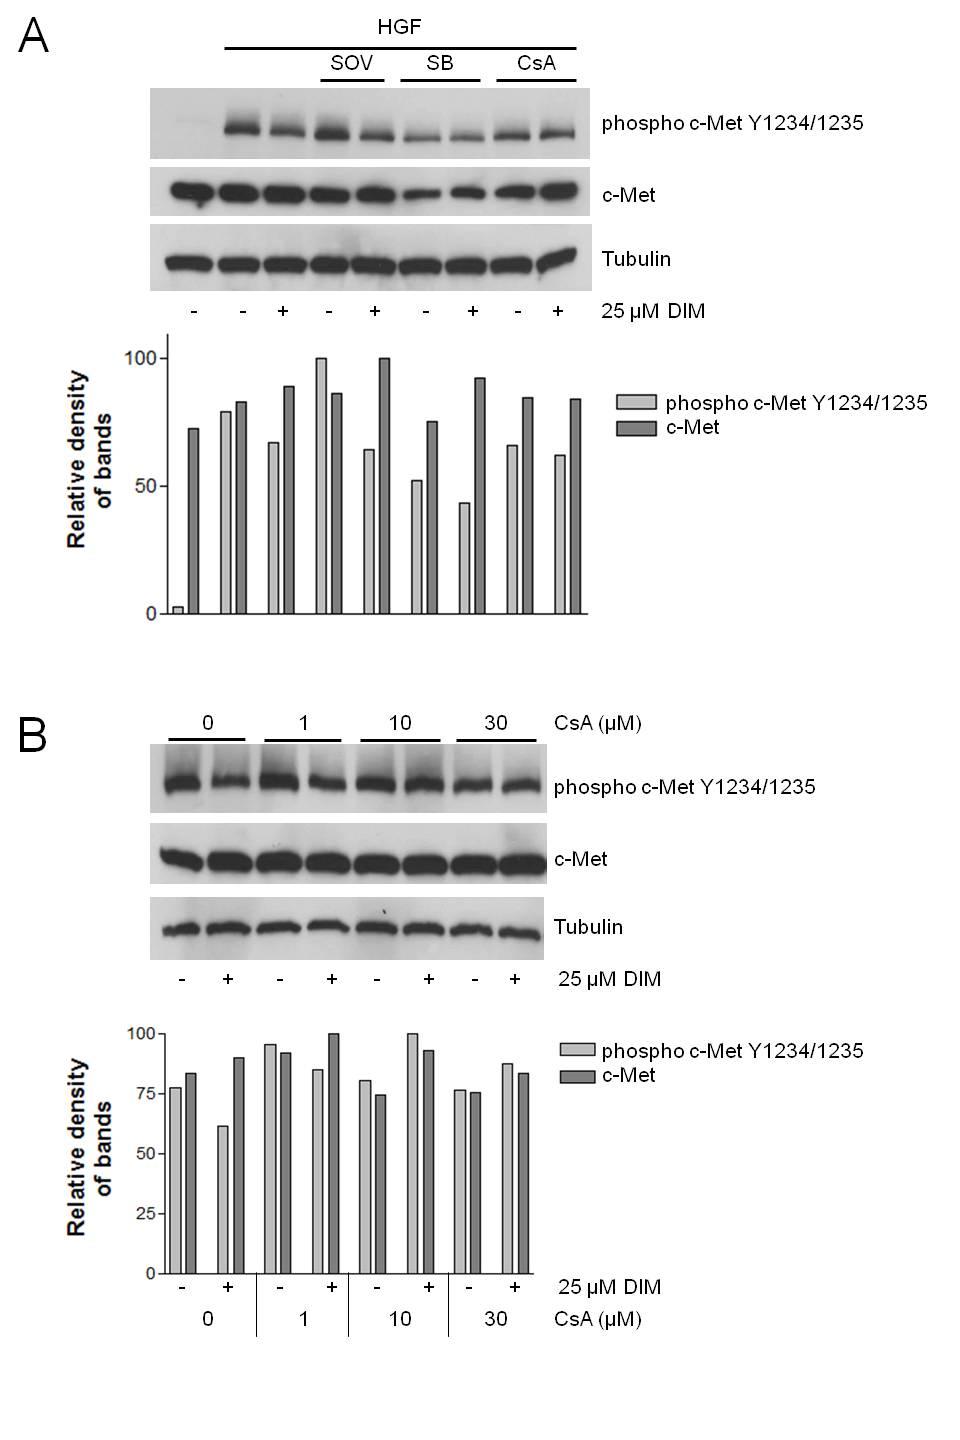 Figure 3-7. Involvement of protein tyrosine phosphatases, p38, and calcineurin in DIM s effects on c-met phosphorylation.